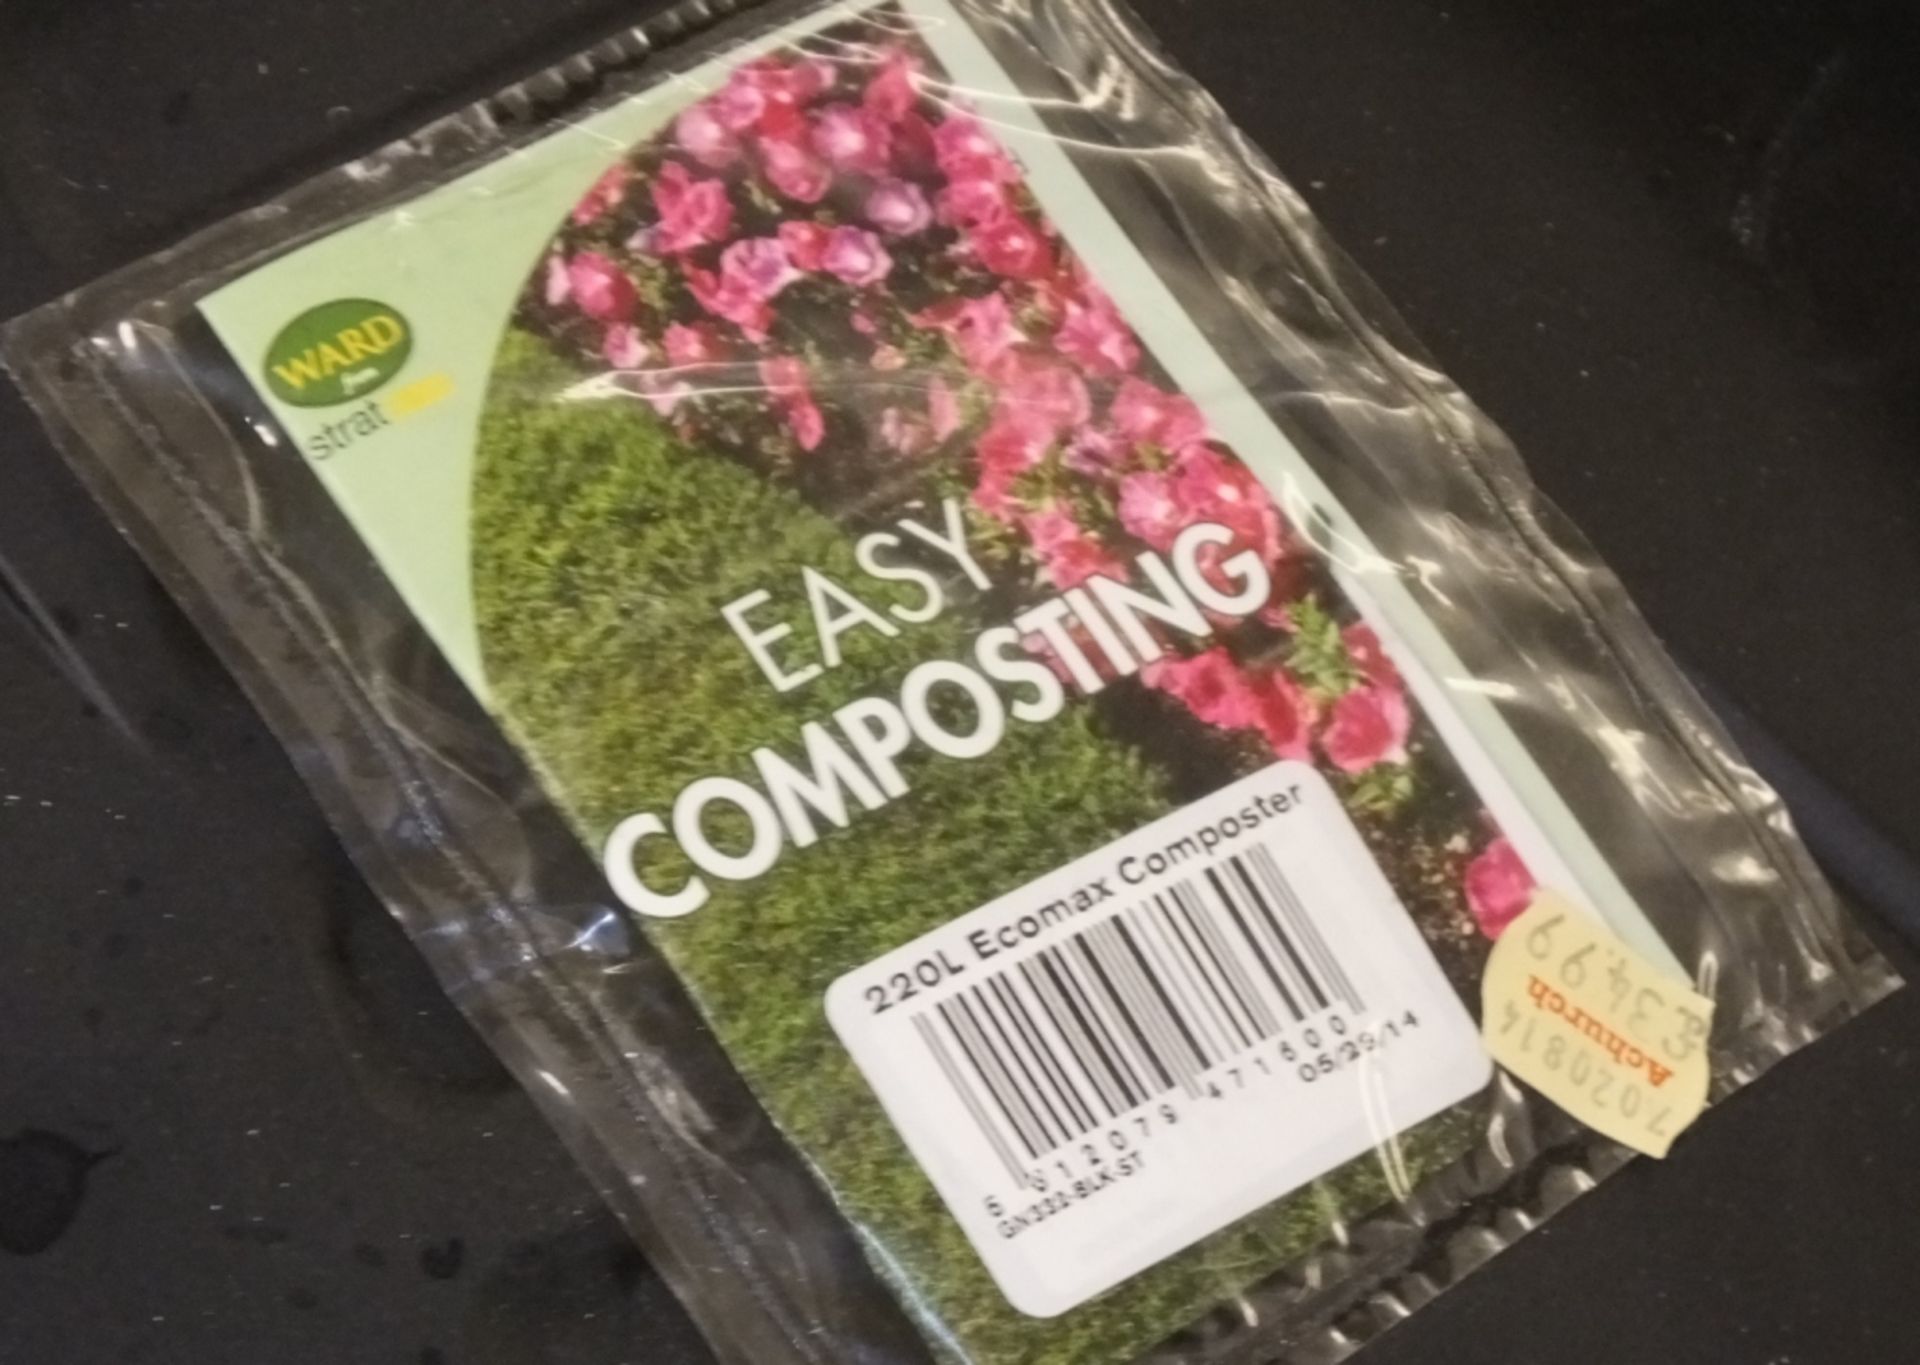 Ecomax garden composter - Image 2 of 3